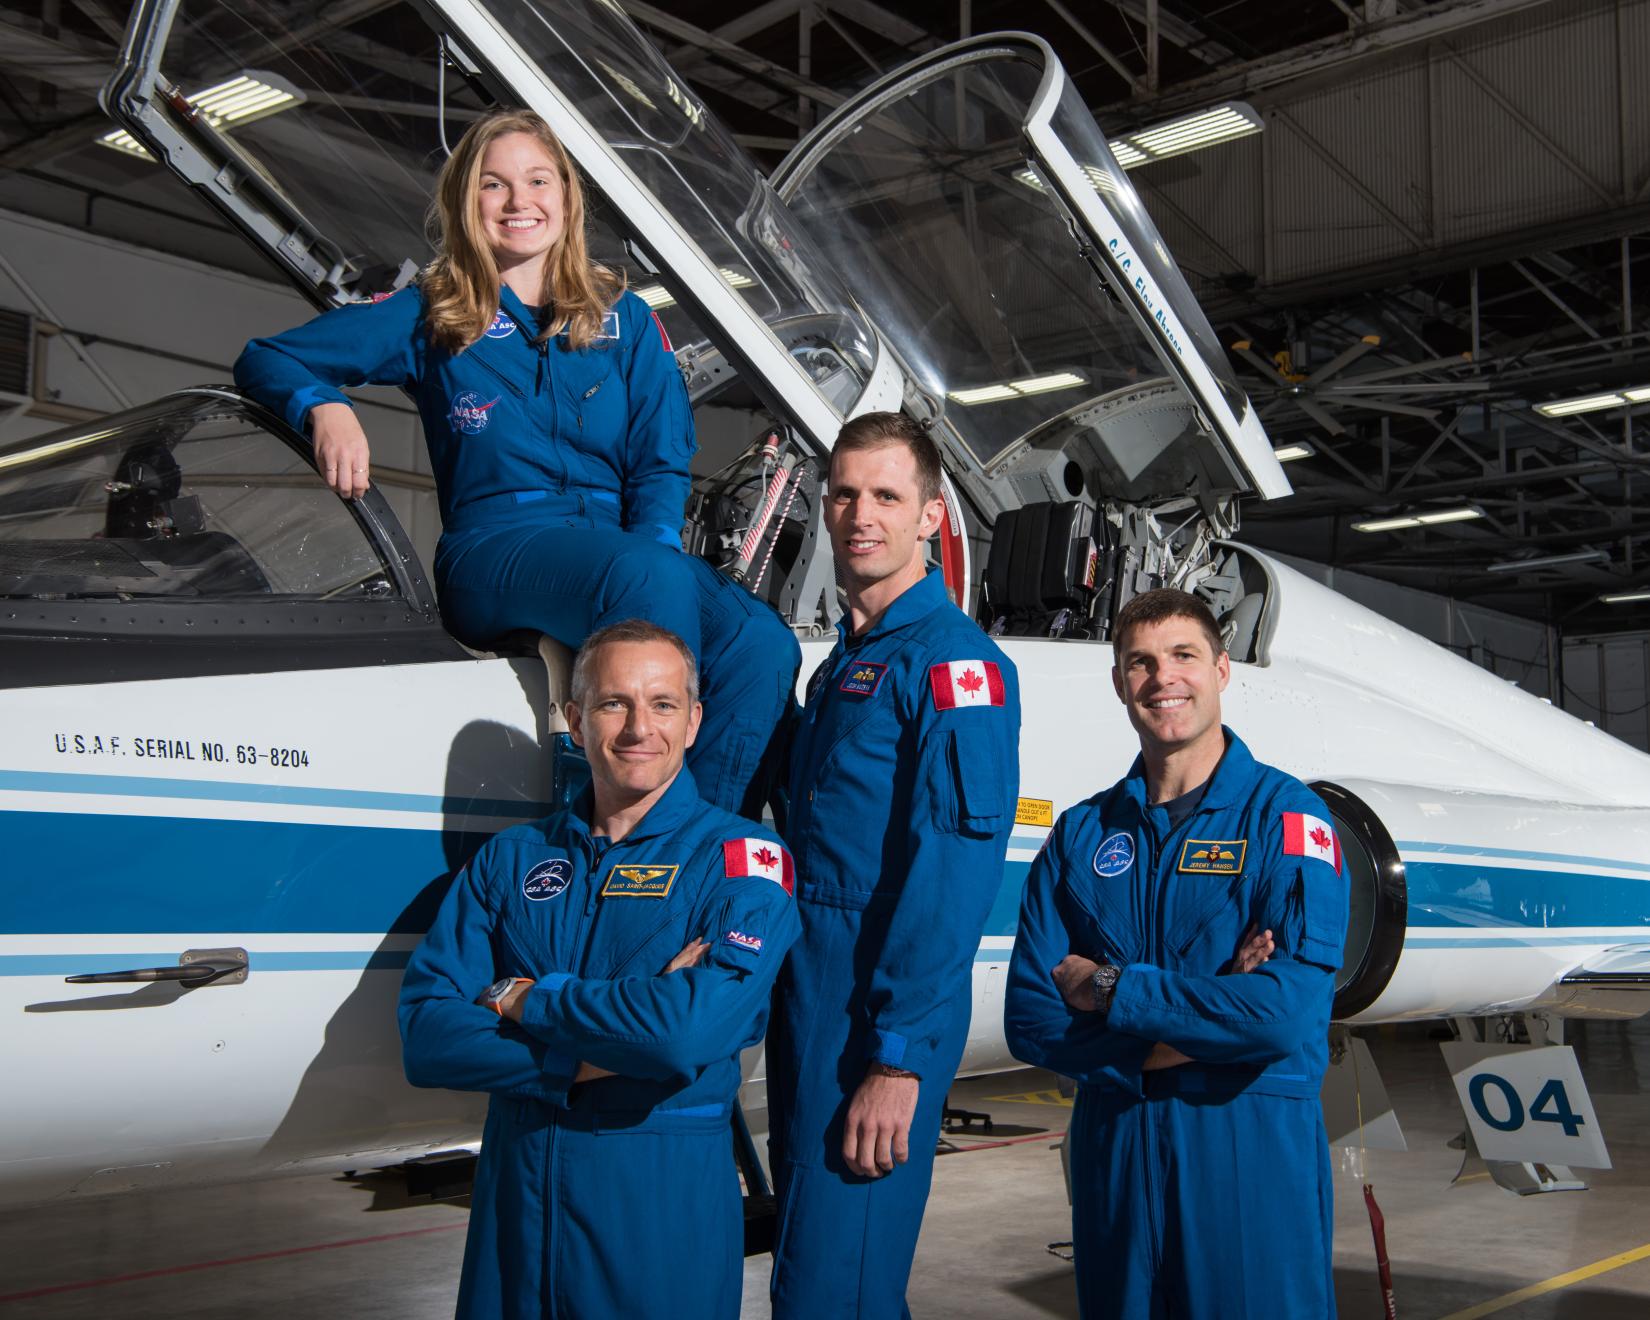 Four active Canadian astronauts: David Saint-Jacques, Jeremy Hansen, Jenni Gibbons, and Joshua Kutryk